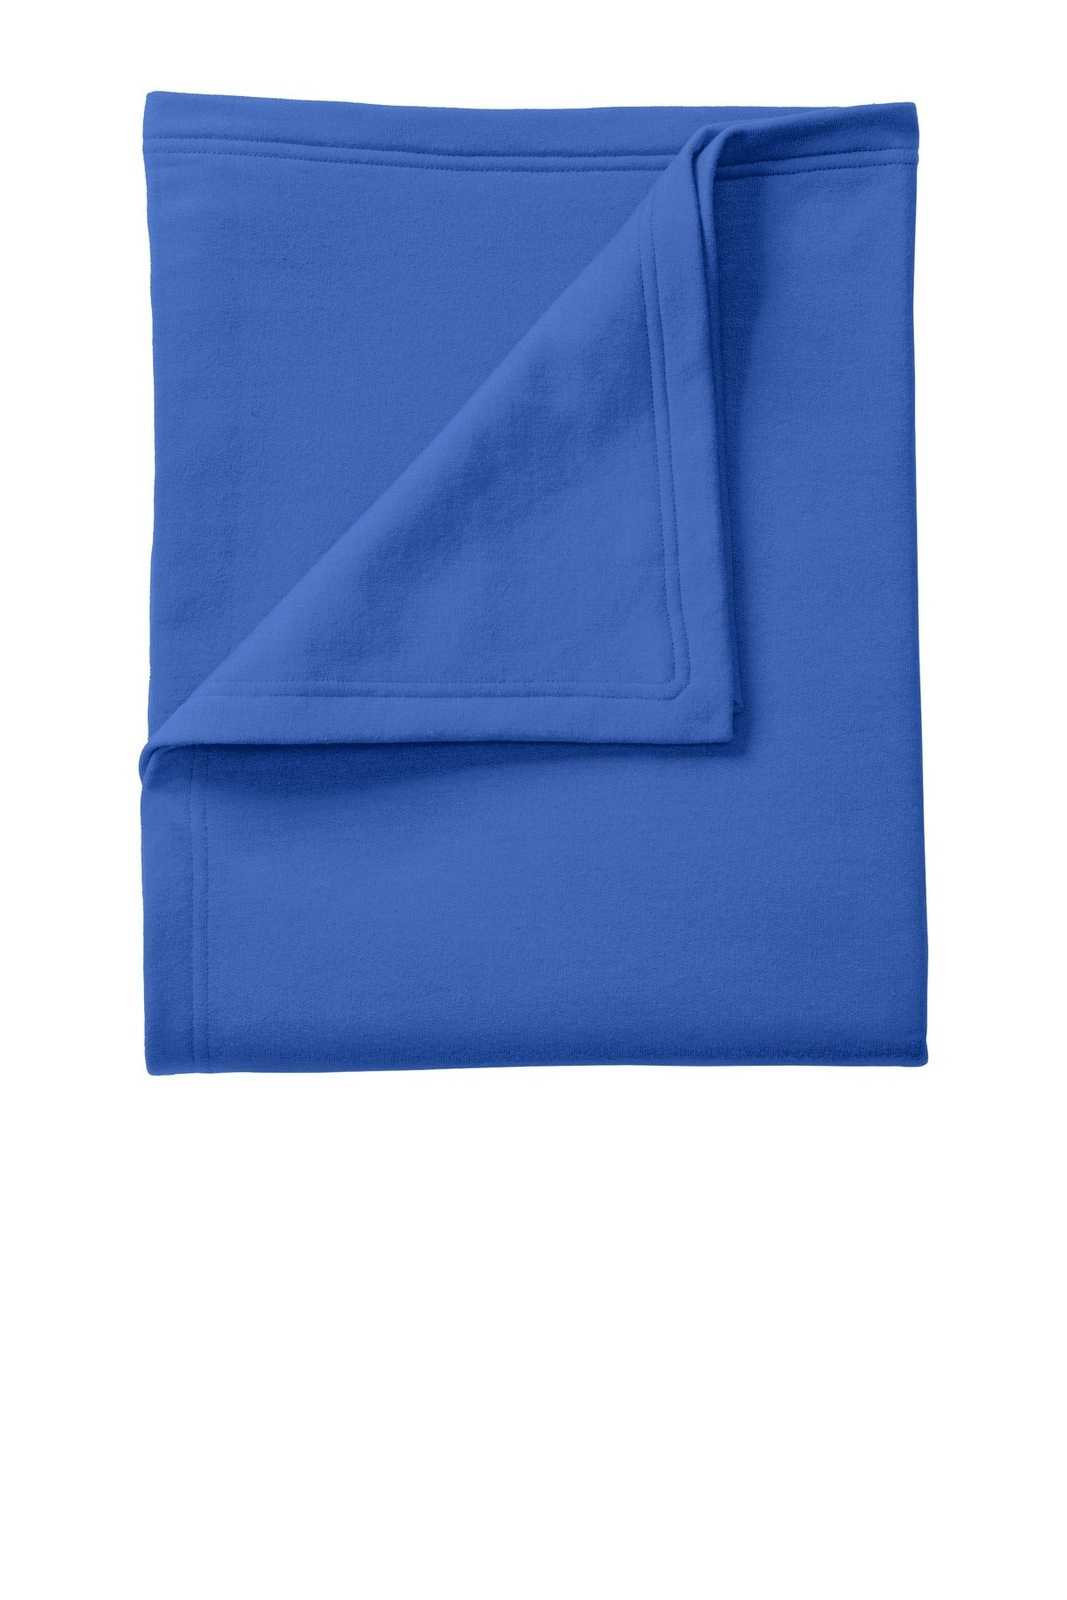 Port &amp; Company BP78 Core Fleece Sweatshirt Blanket - Royal - HIT a Double - 1